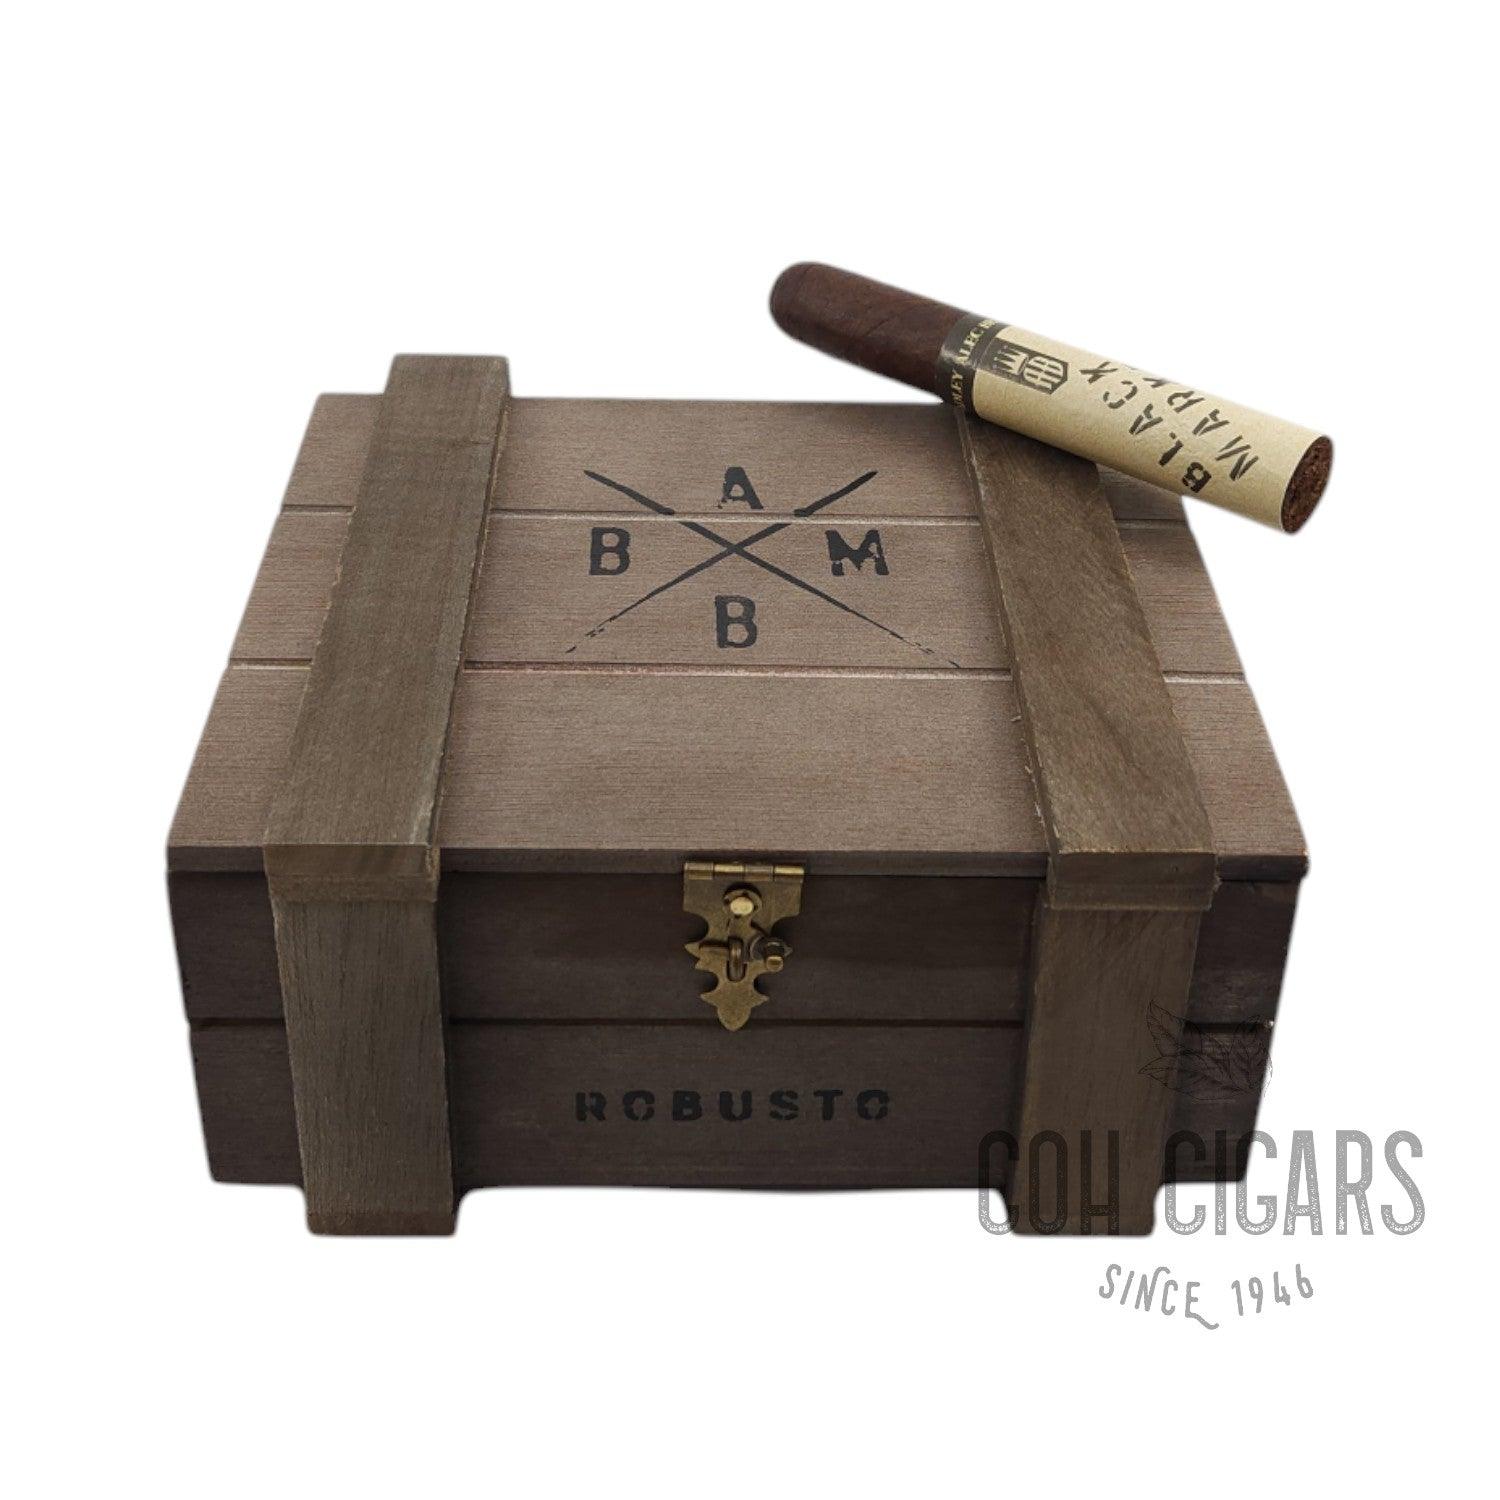 Alec Bradley Cigar | Black Market Robusto | Box 22 - hk.cohcigars